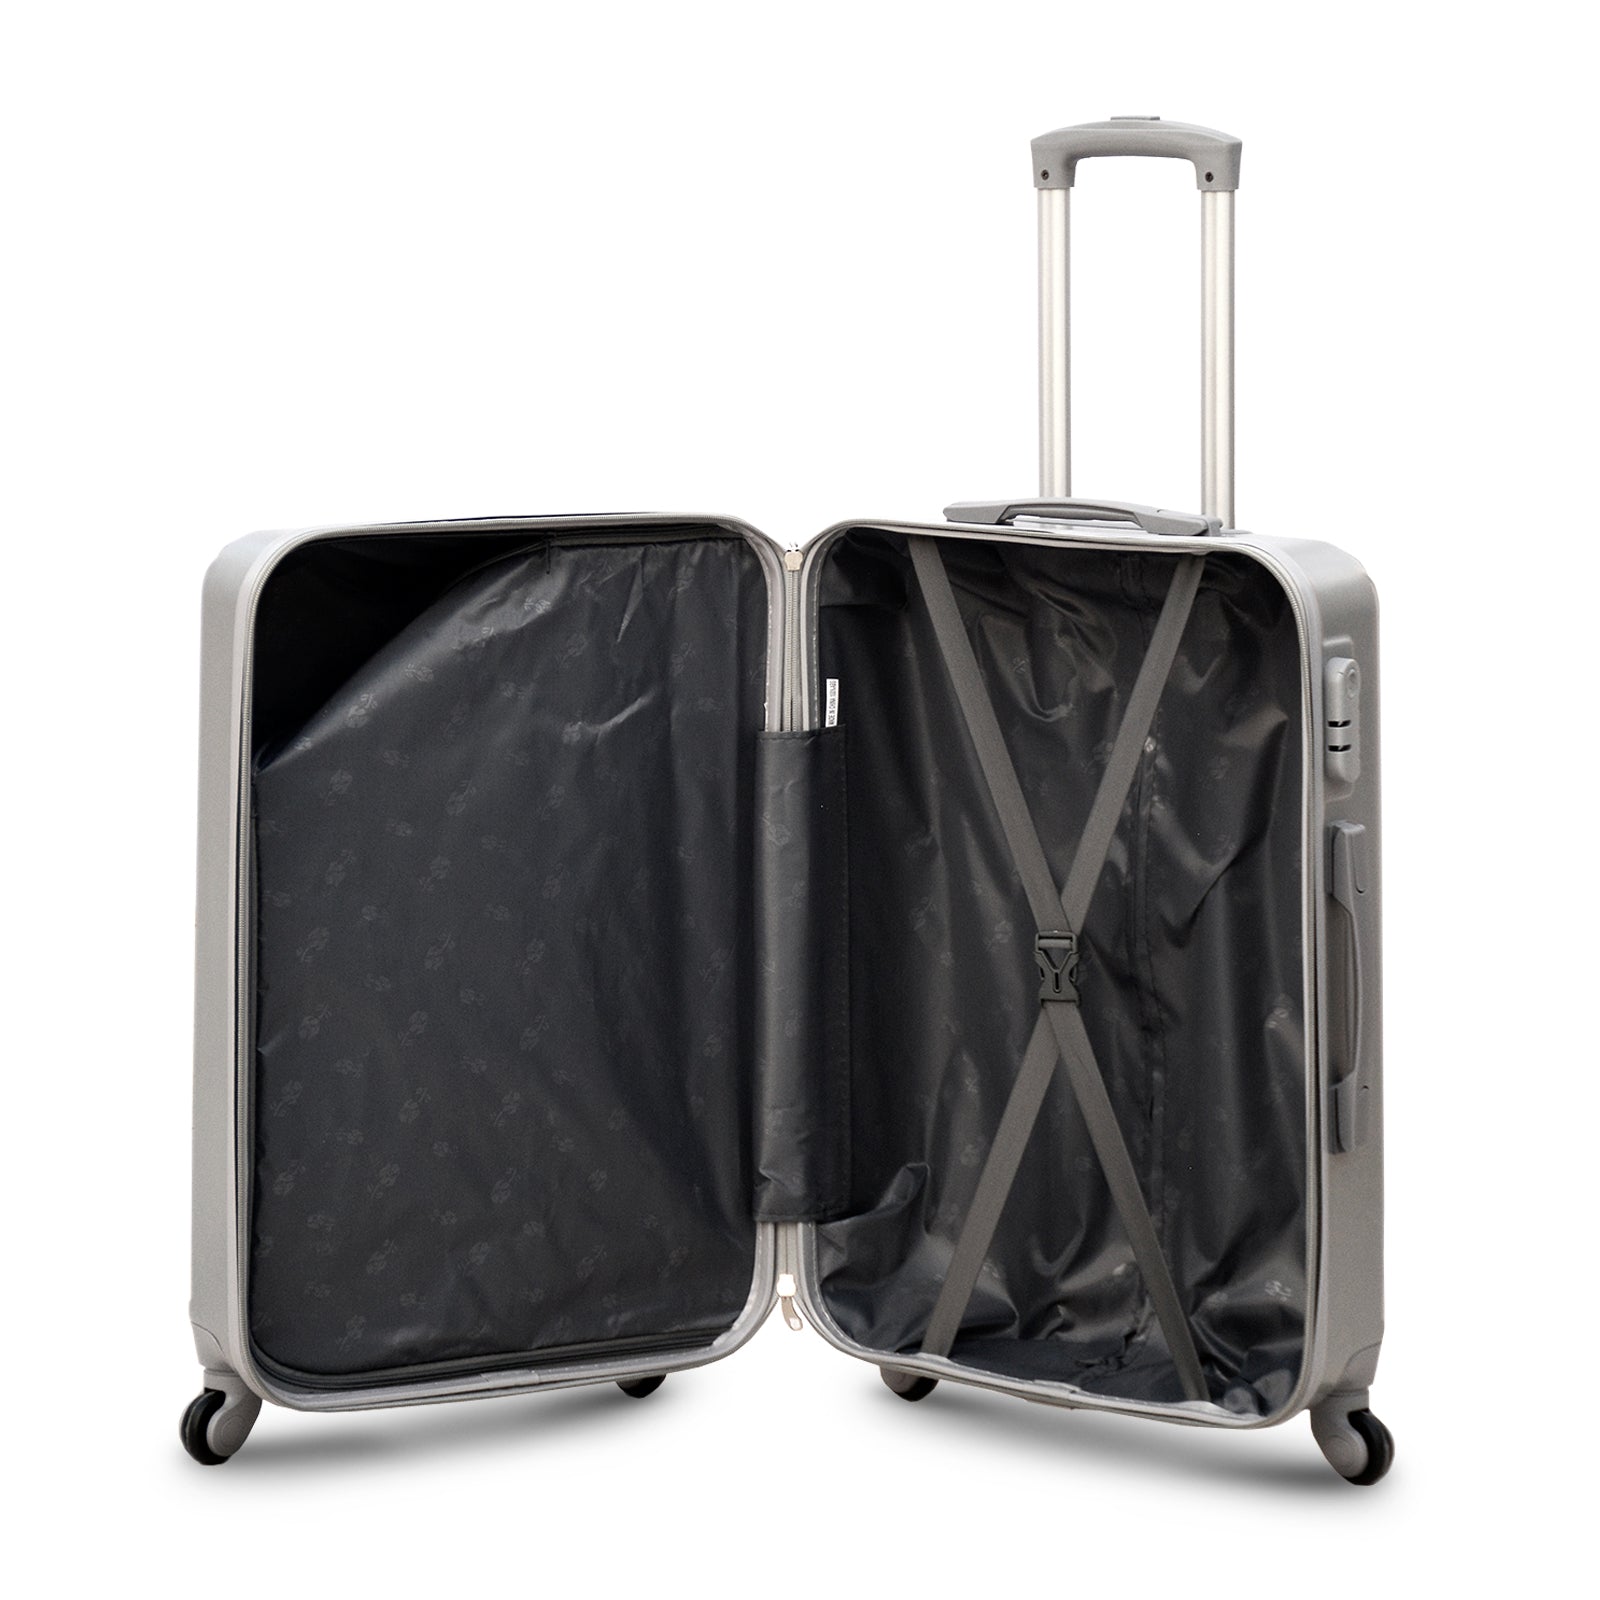 20 Inches Silver Fashion ABS Luggage Lightweight Hard Case Trolley Bag zaappy.com